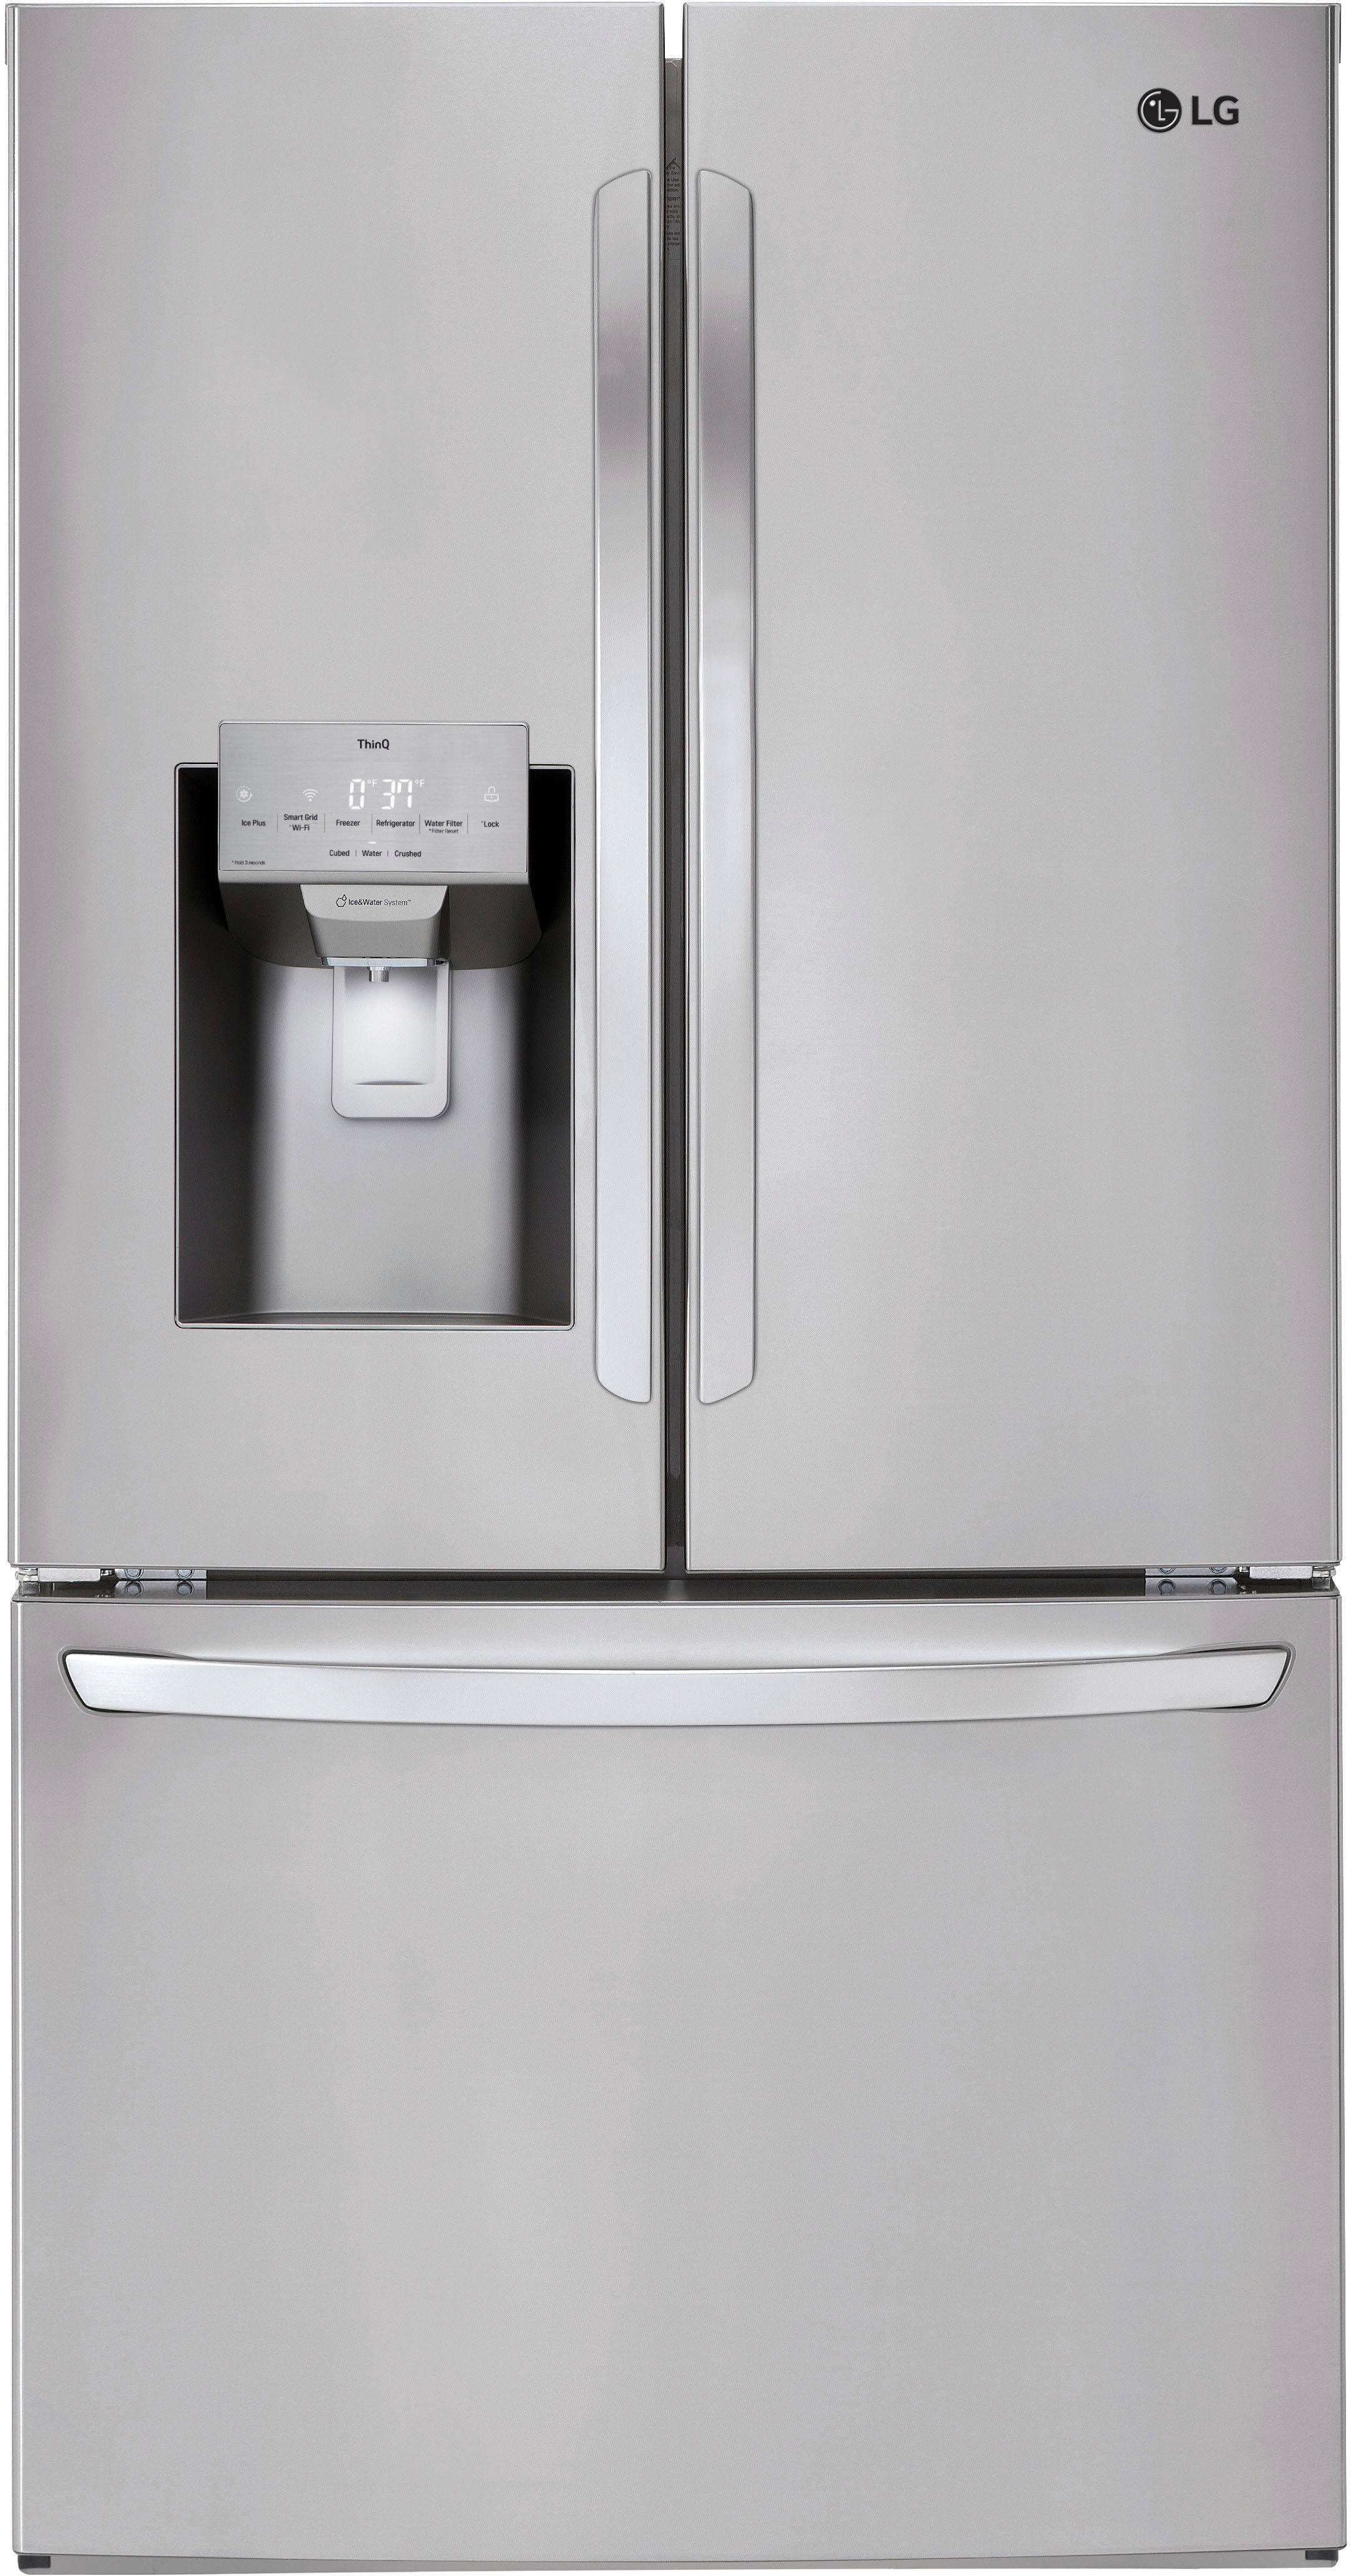 LG refrigerators  How the Original Water Filters of LG